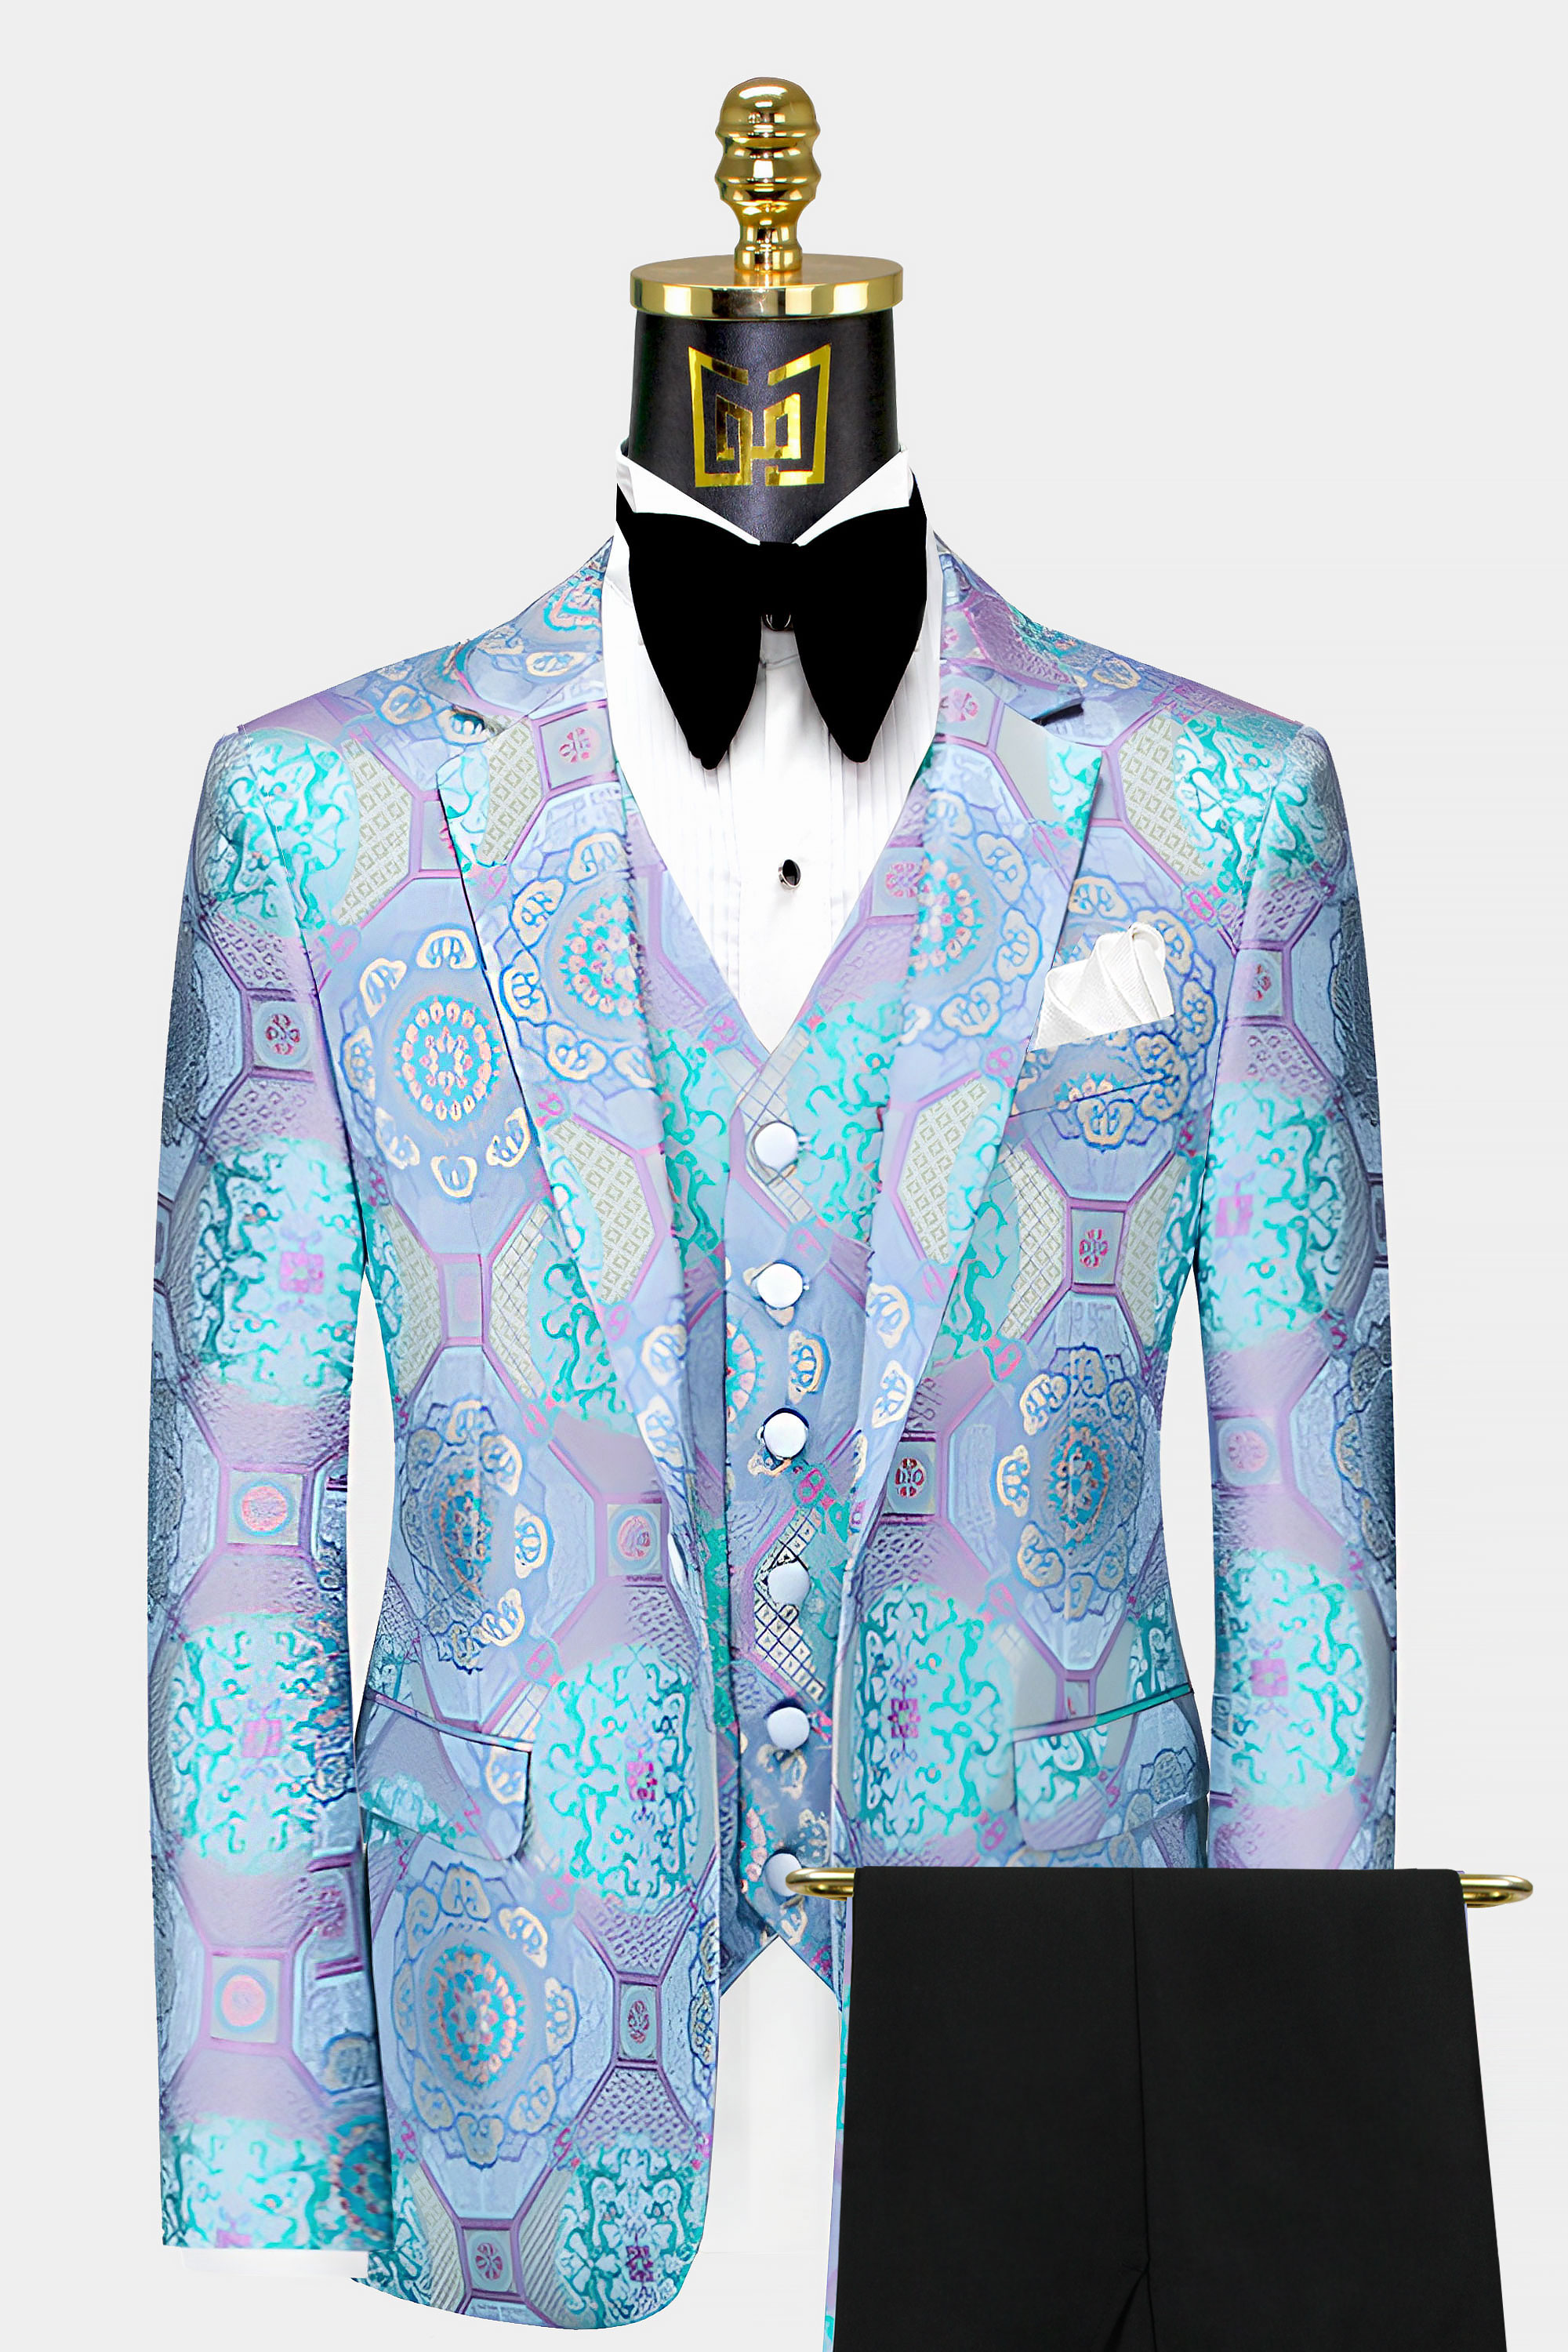 Purple-and-Turquoise-Tuxedo-Suit-Groom-Prom-Attire-from-Gentlemansguru.com